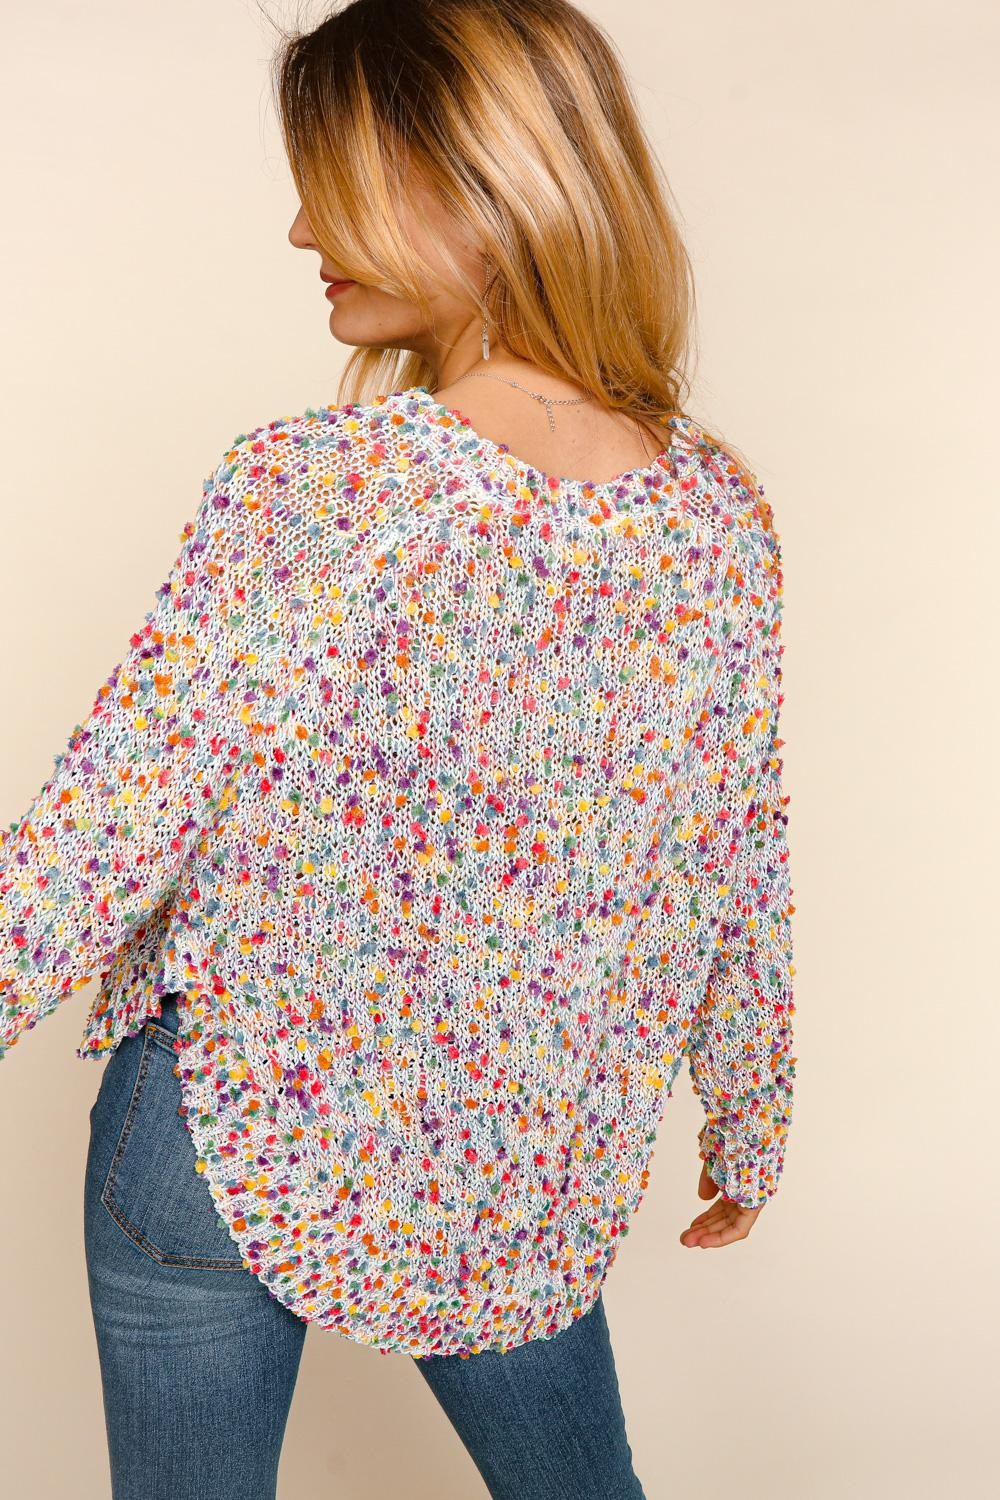 Sarah Popcorn Knit Sweater - Ivory Multi